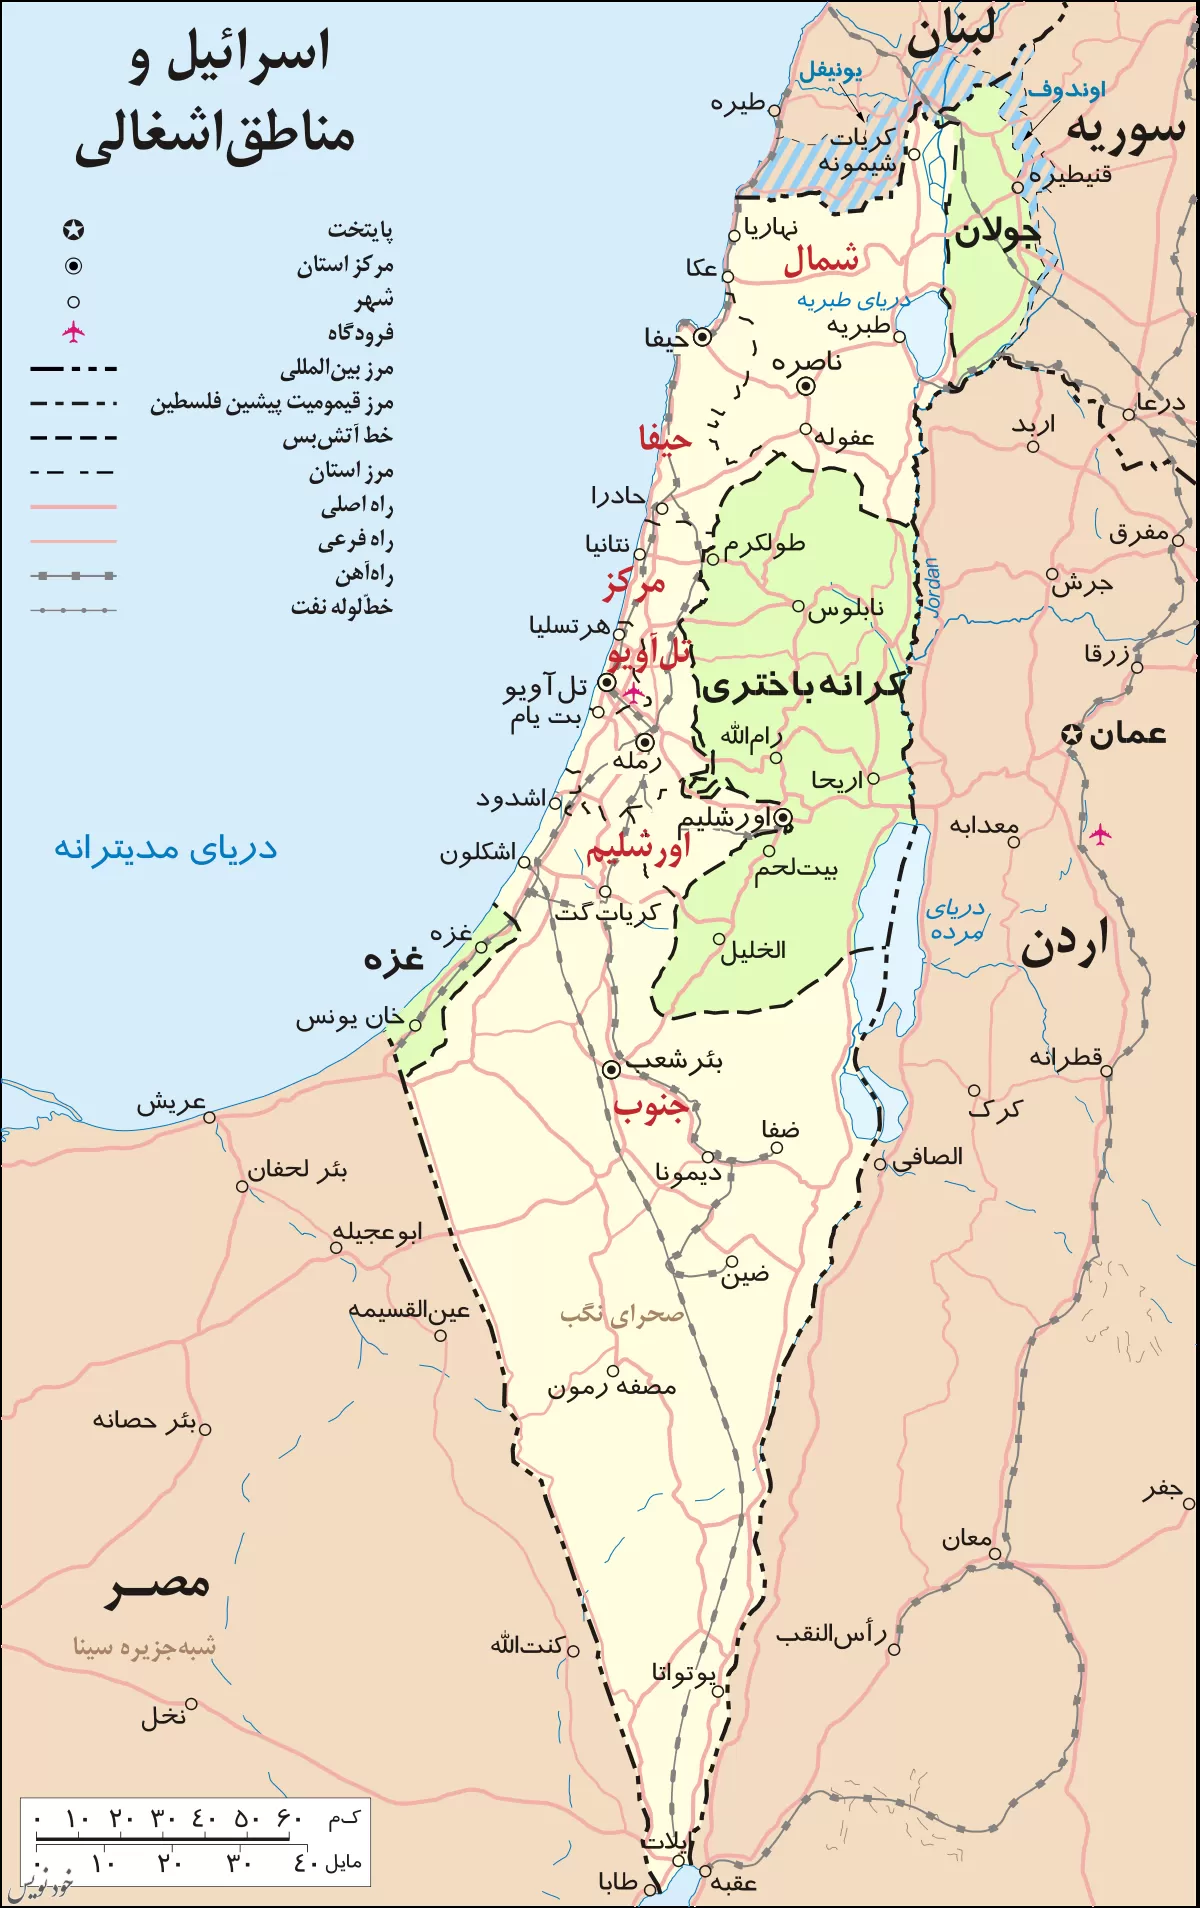 تاریخچه فلسطین